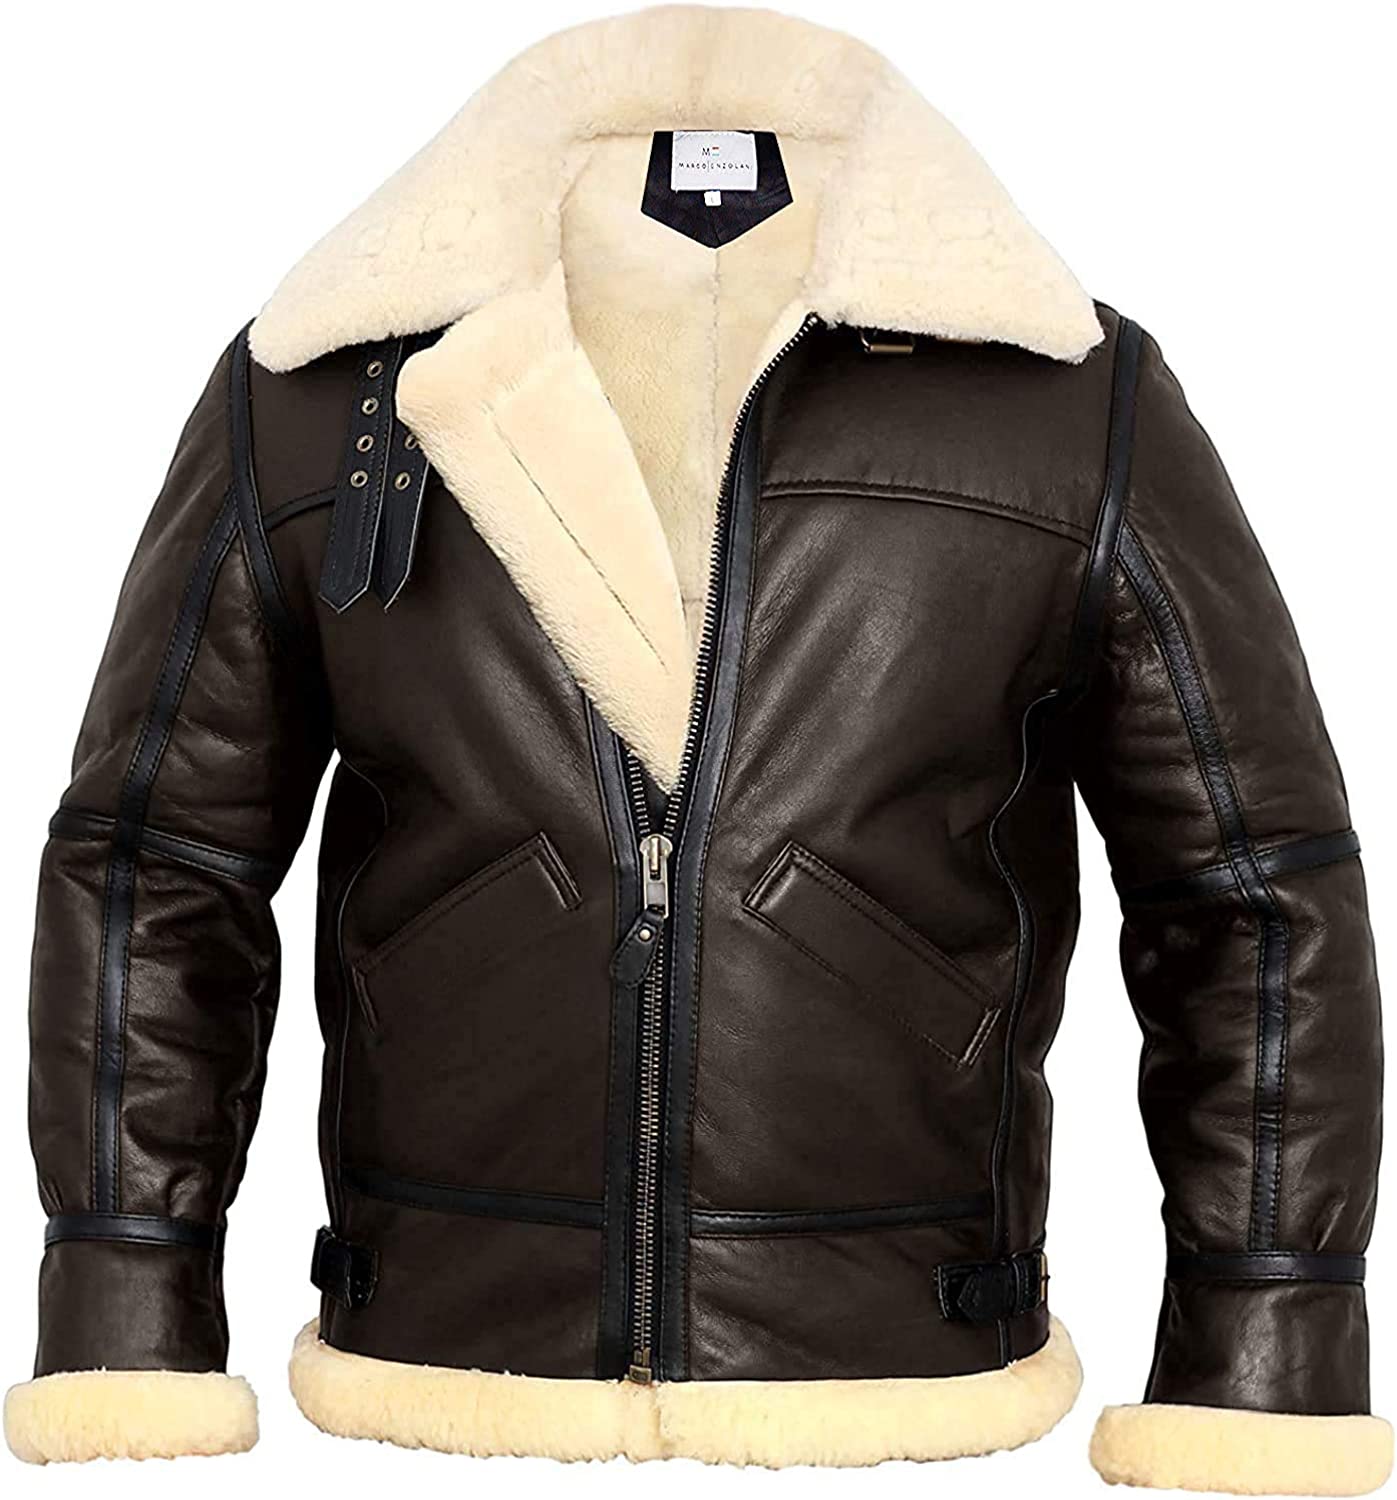 Black shearling jacket mens For winter | Upto 50% Off